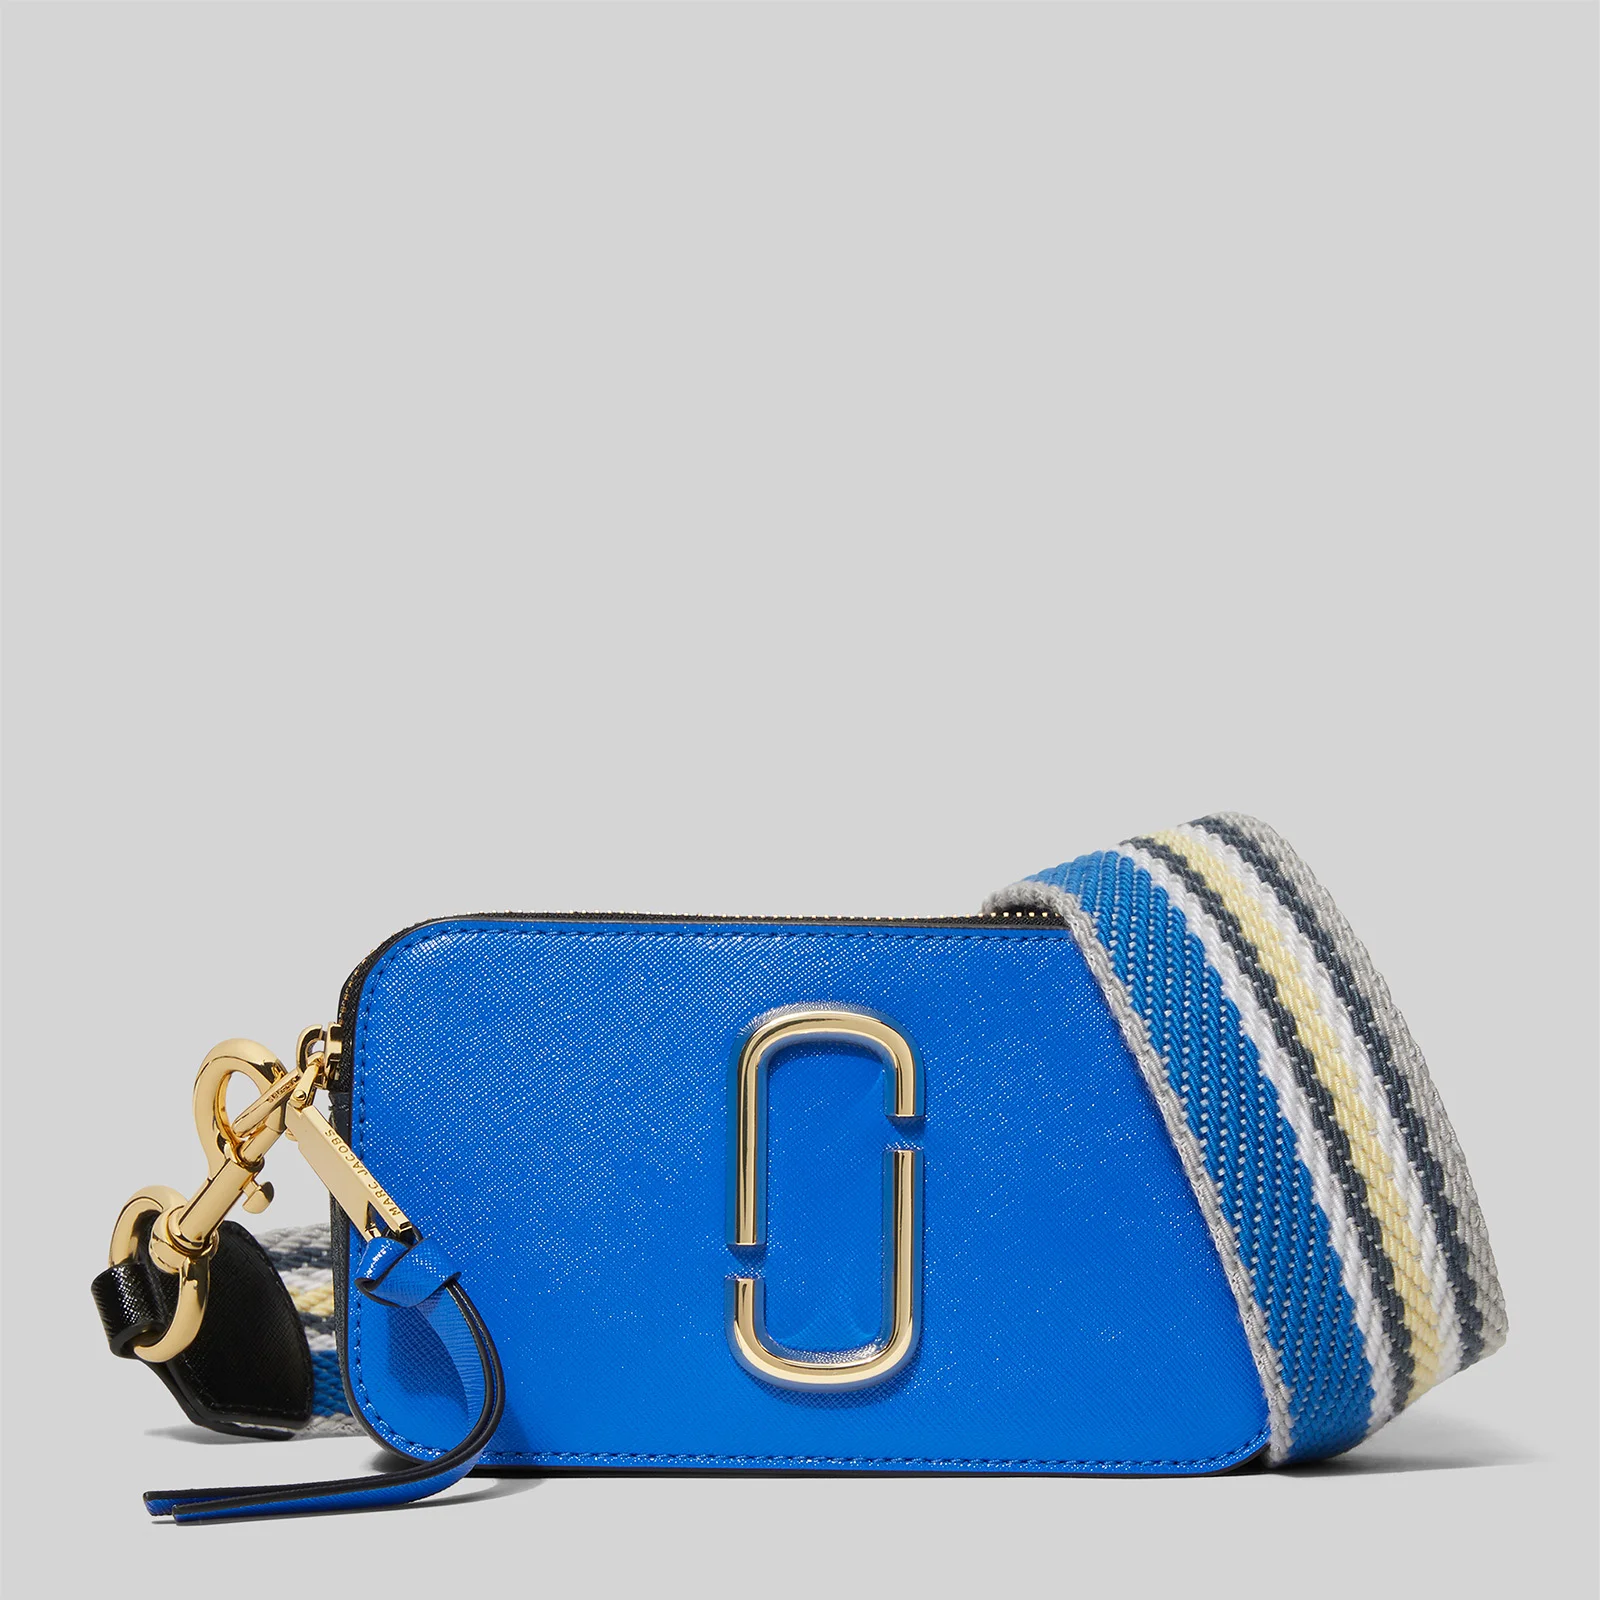 Marc Jacobs Women's Snapshot Cross Body Bag - New Dazzling Blue Multi Image 1